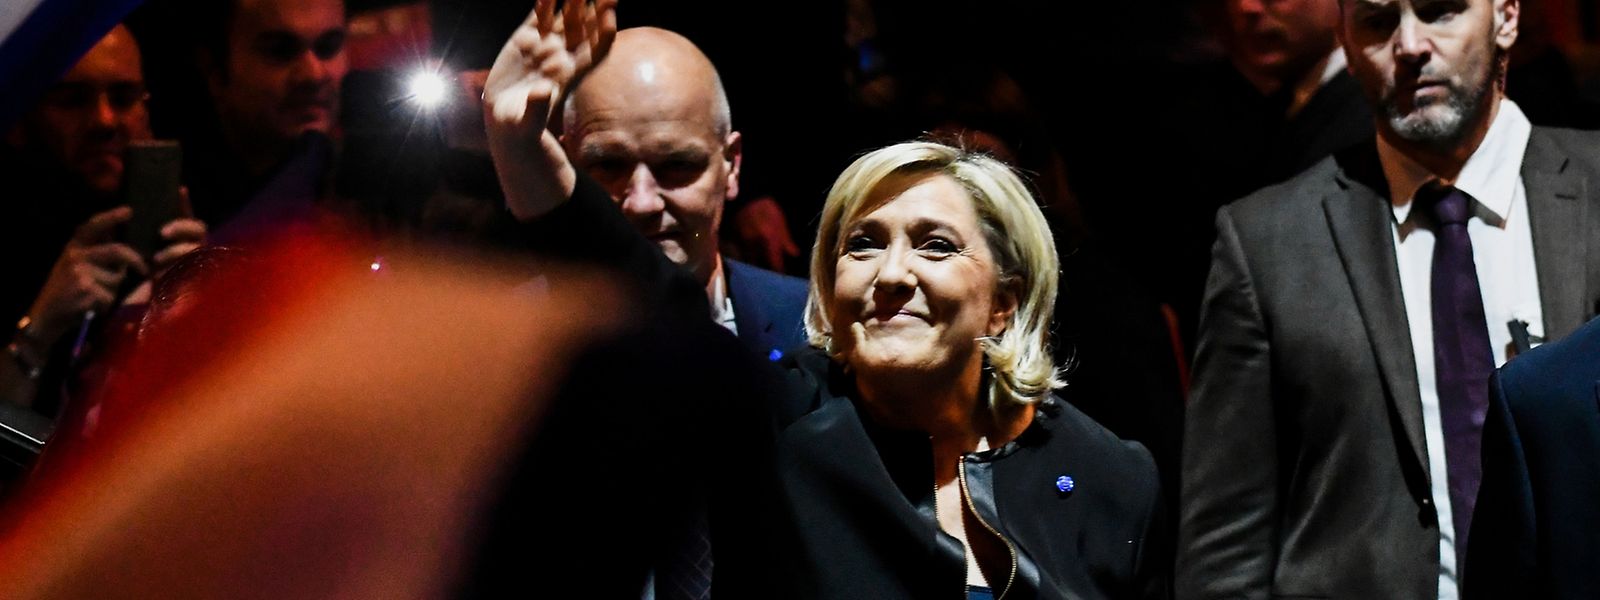 Marine Le Pen startete am Wochenende offiziell in den Wahlkampf.